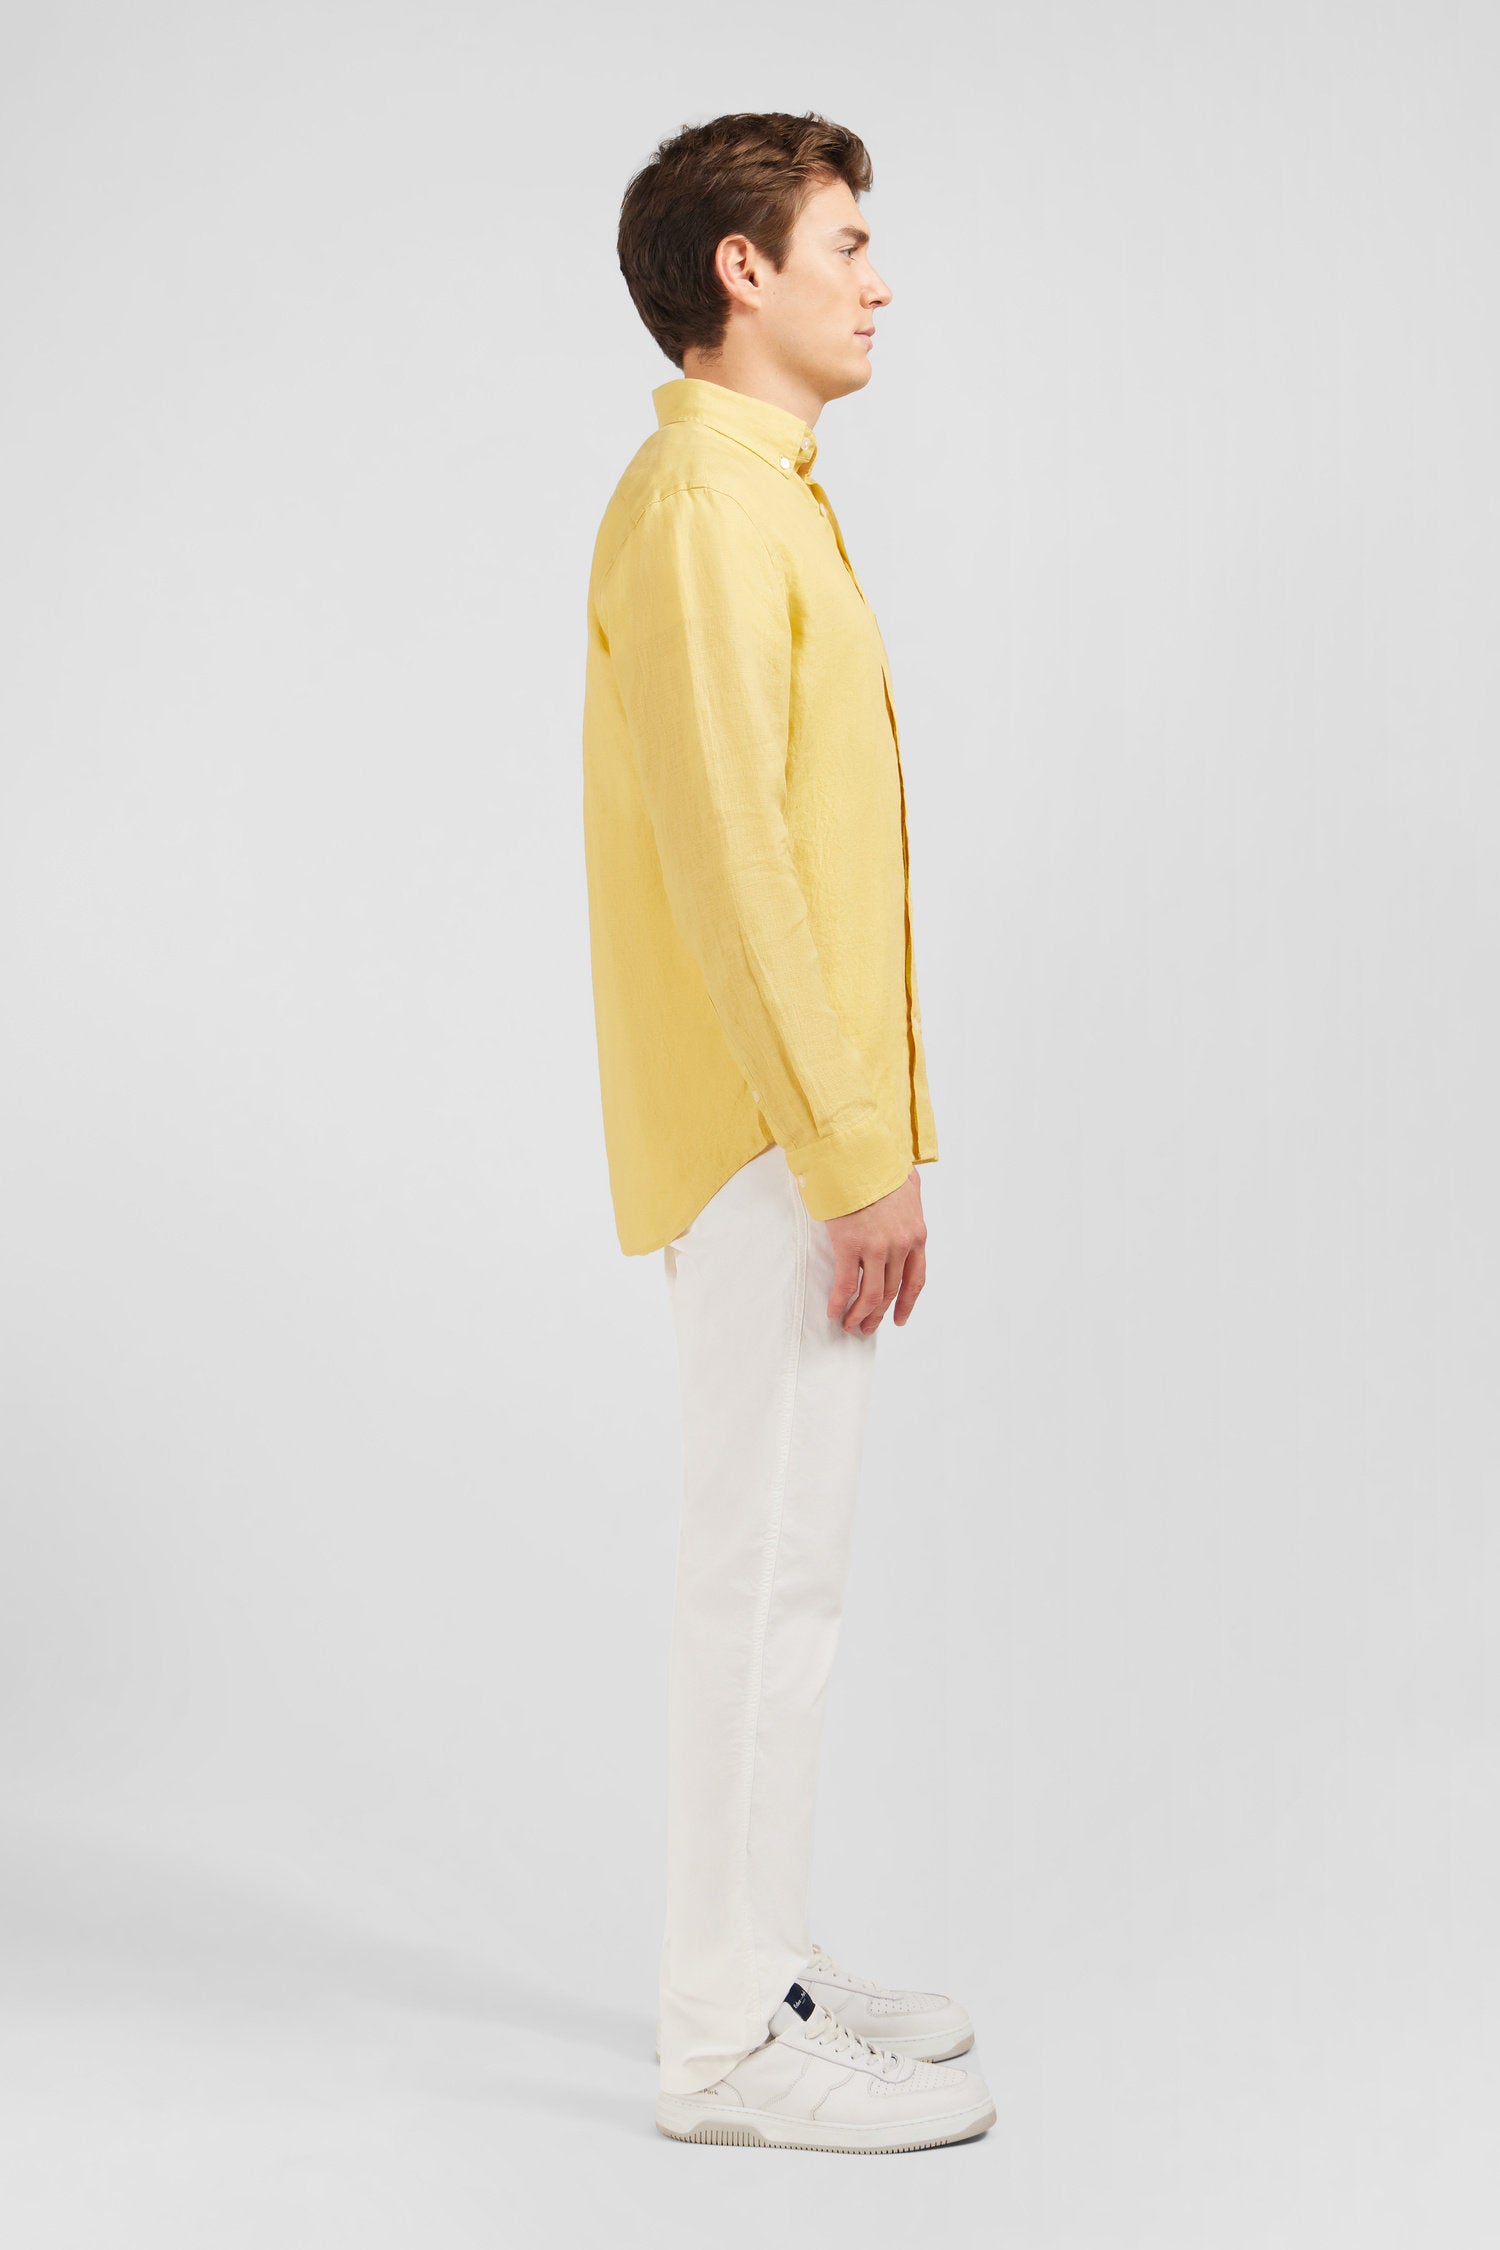 Plain Yellow Linen Shirt_E24Checl0005_Jac9_04